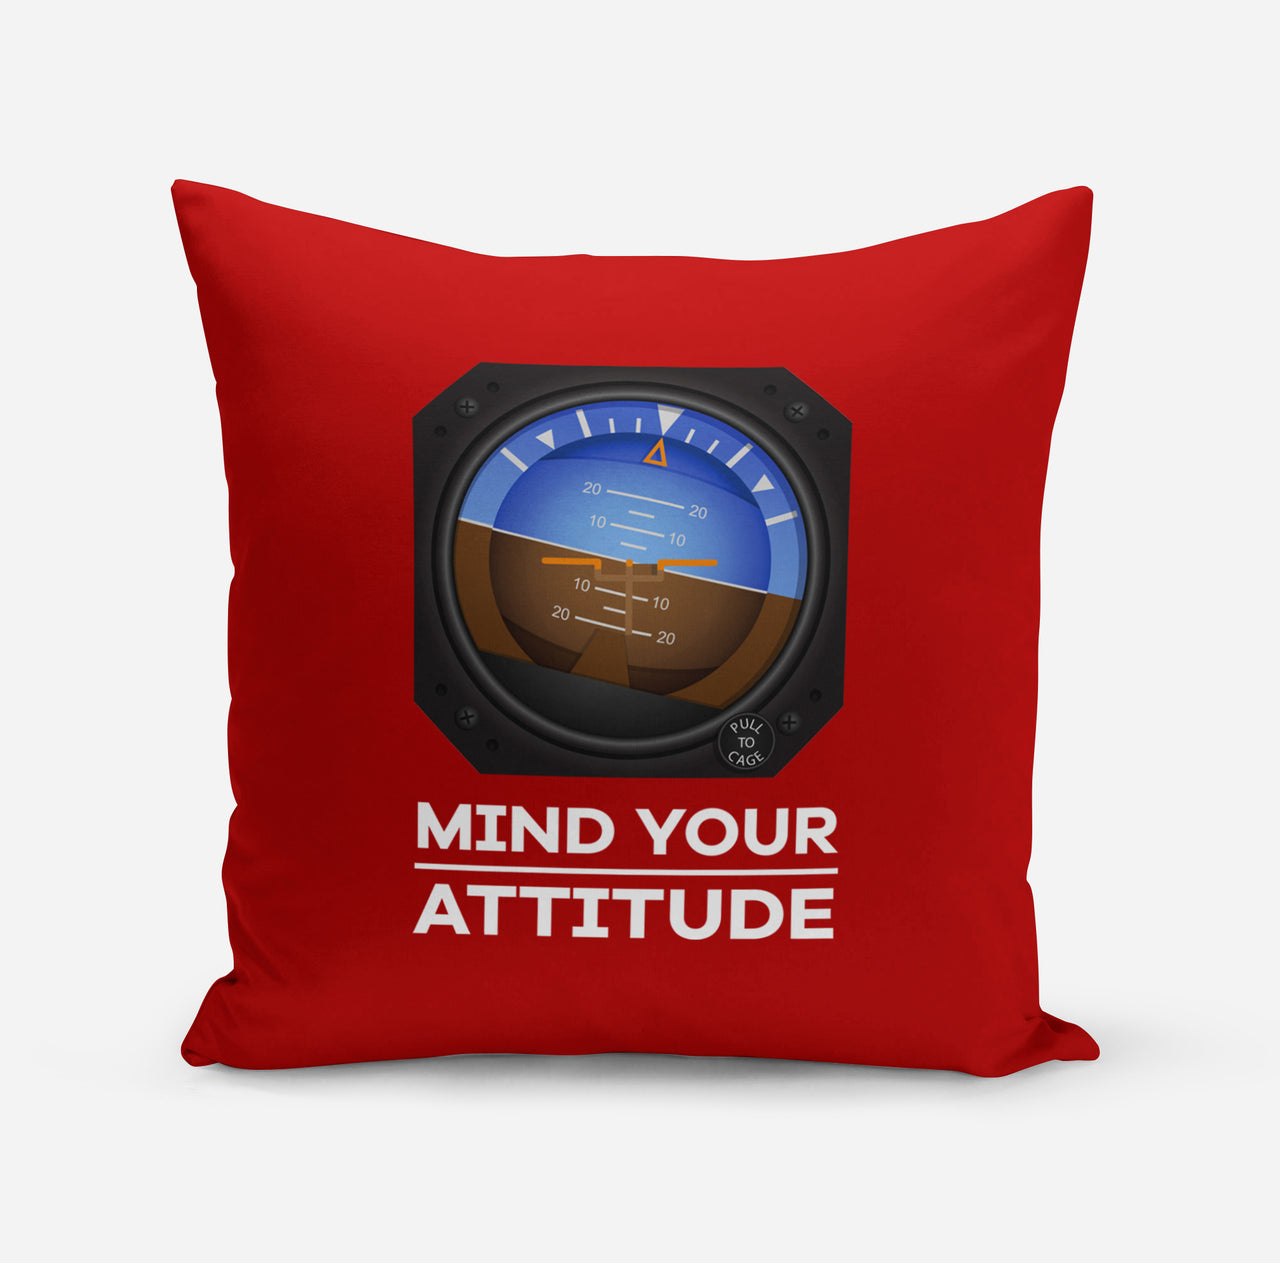 Mind Your Attitude Designed Pillows